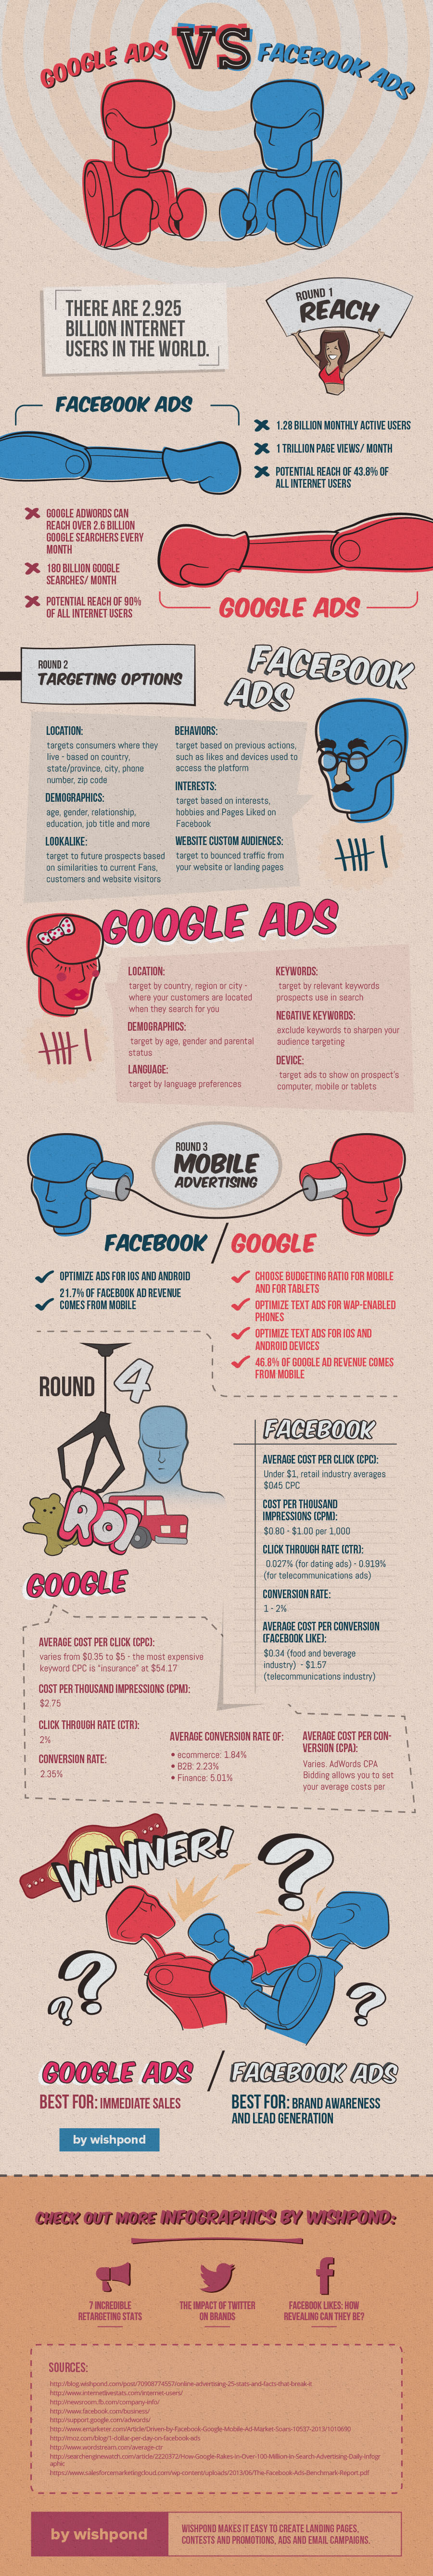 google adwords vs facebook ads infographic